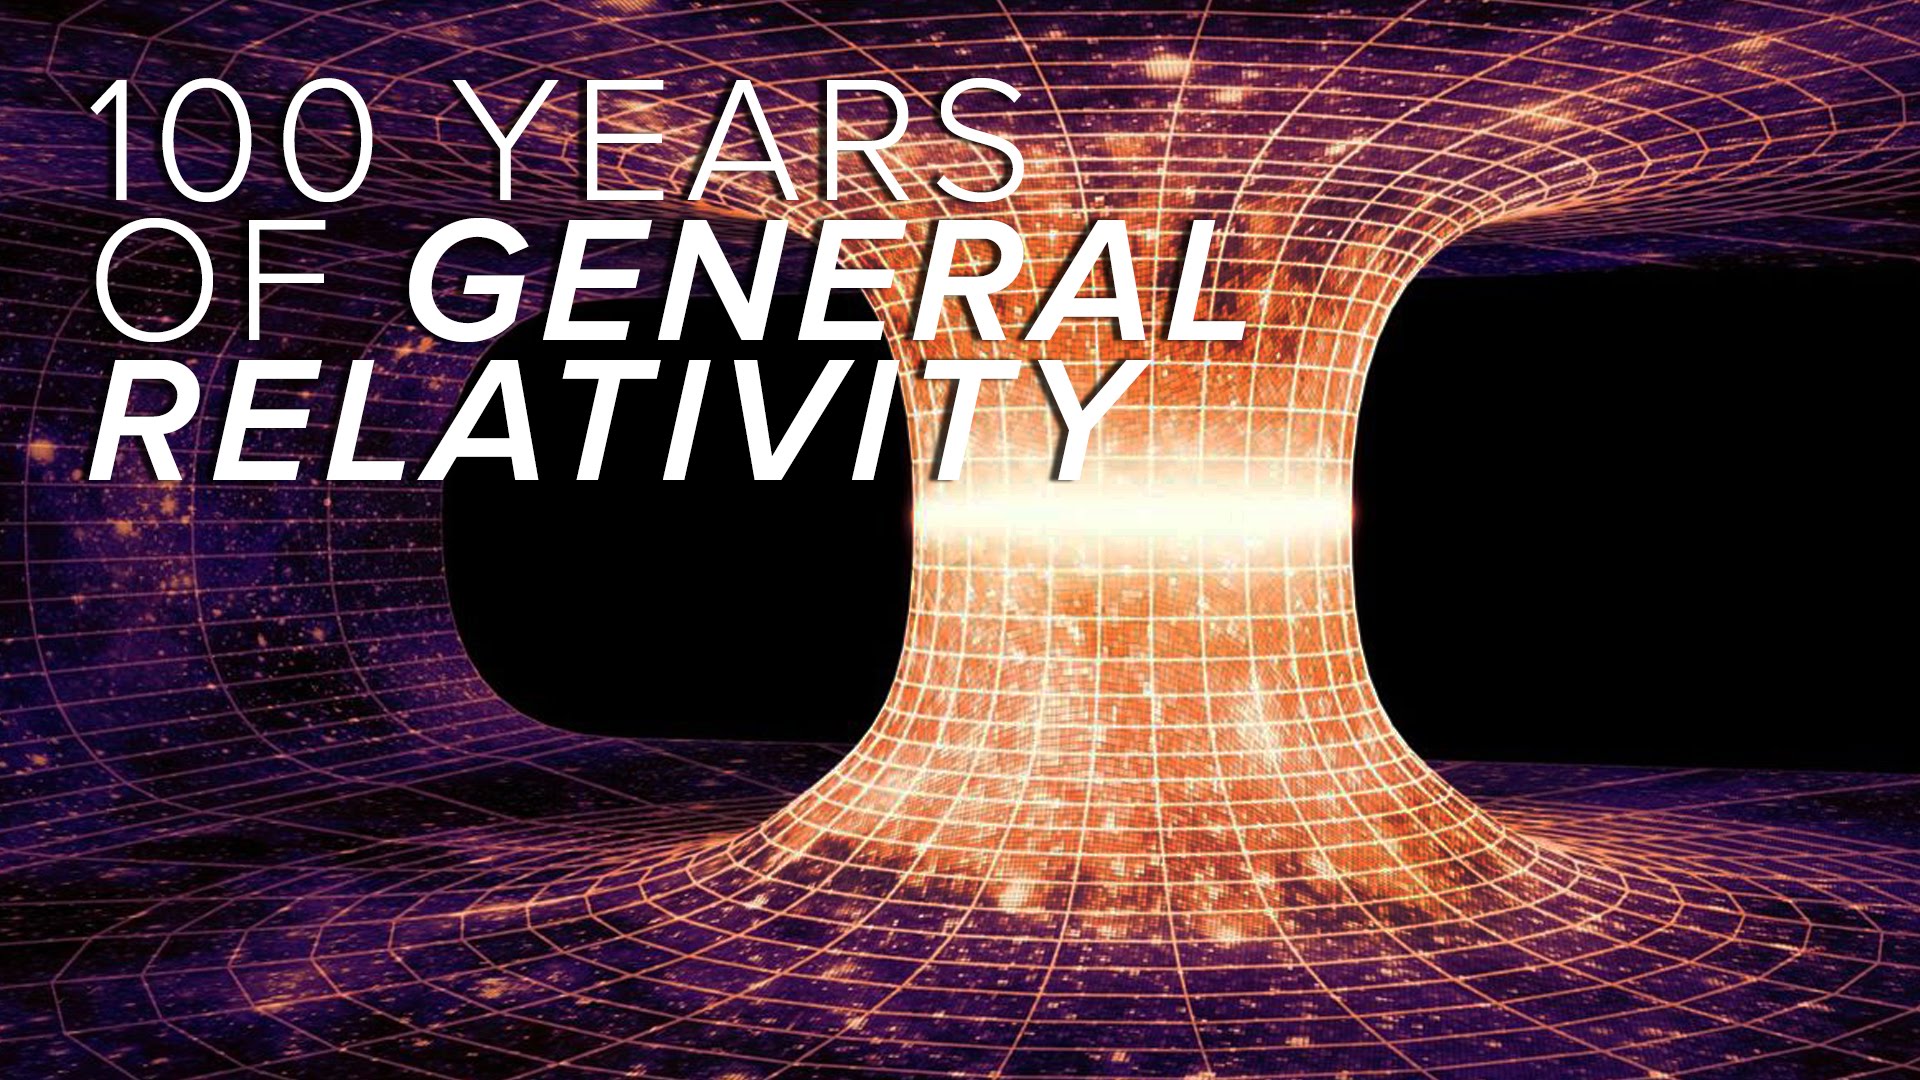 Albert Einstein's Theory of General Relativity at its 100th anniversary!